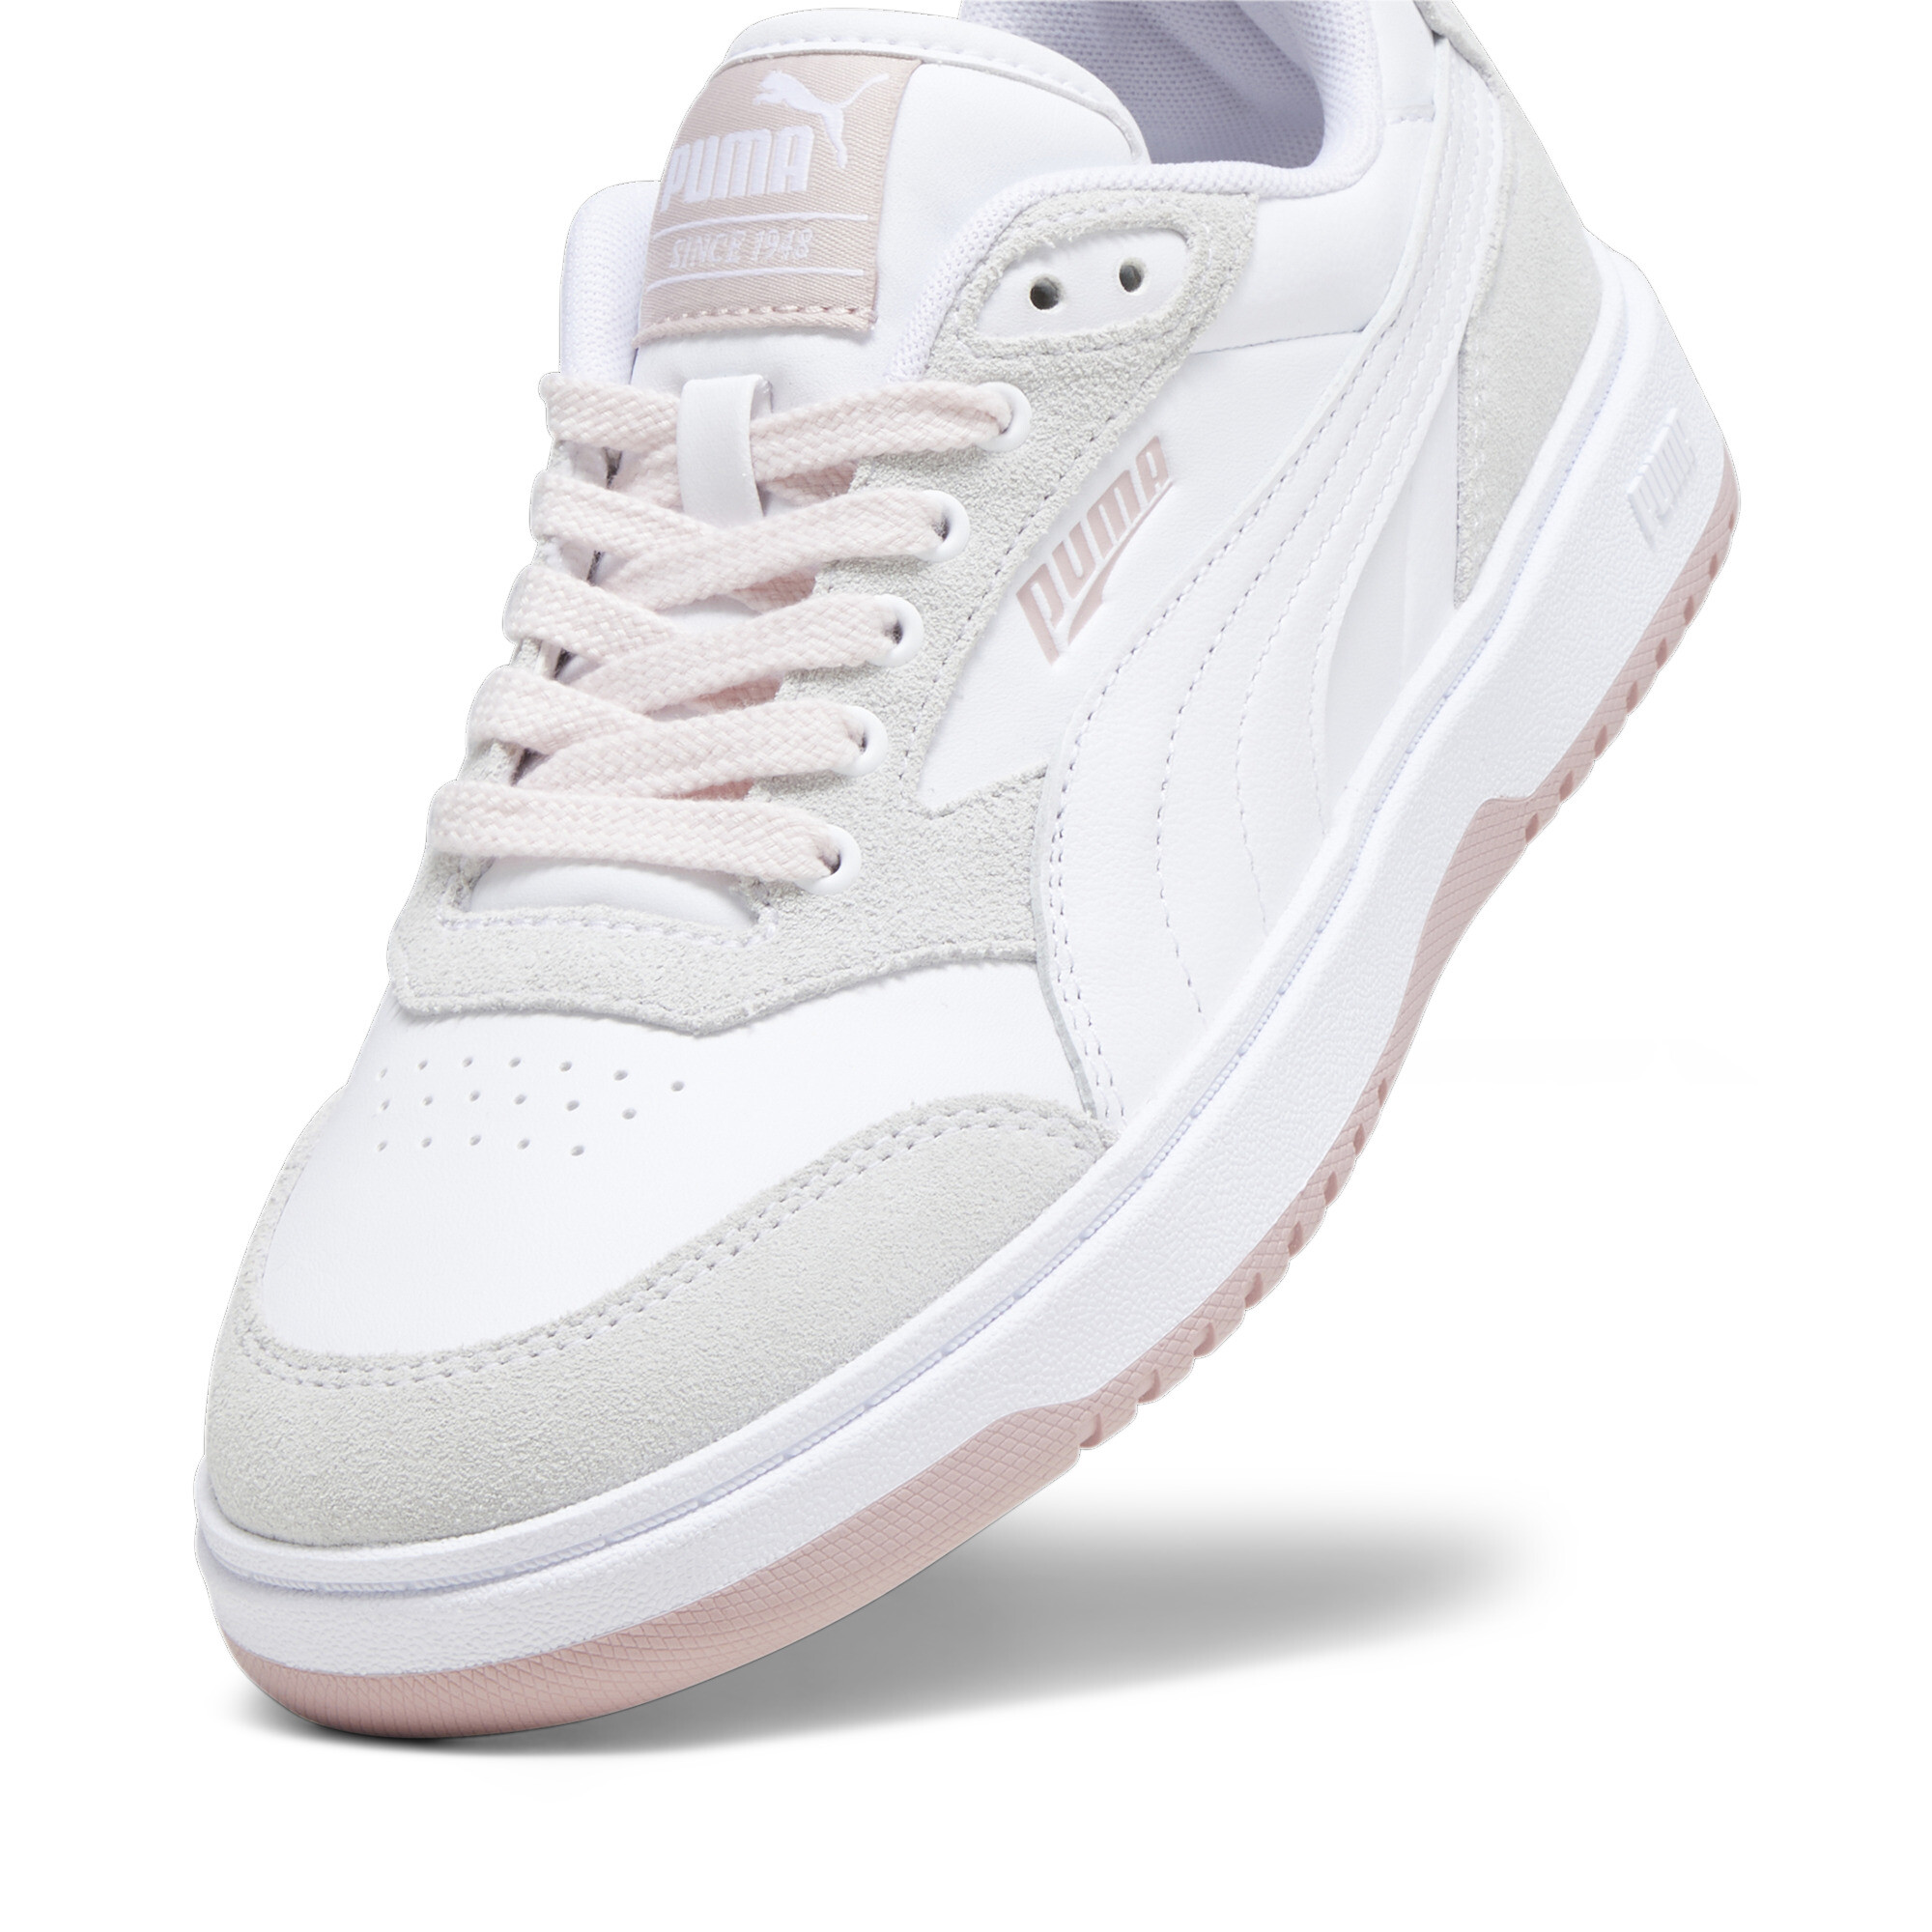 Women's Puma Doublecourt's Sneakers, White, Size 39, Shoes